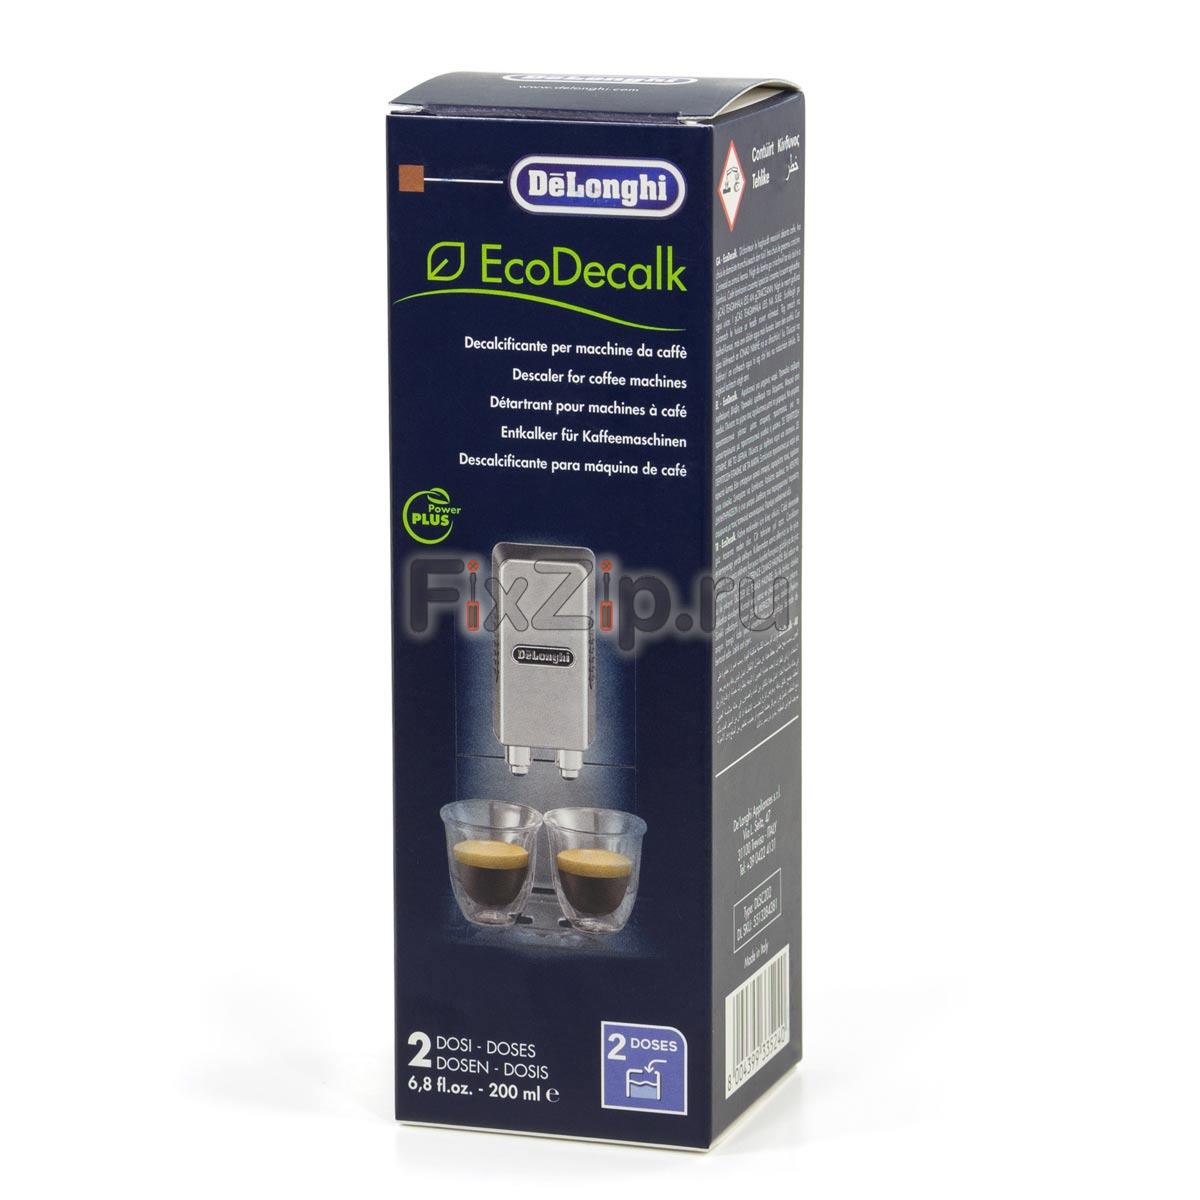 DeLonghi Descaler for Espresso Machines 200ml - Eco Decalk DLSC200 -  5513296021